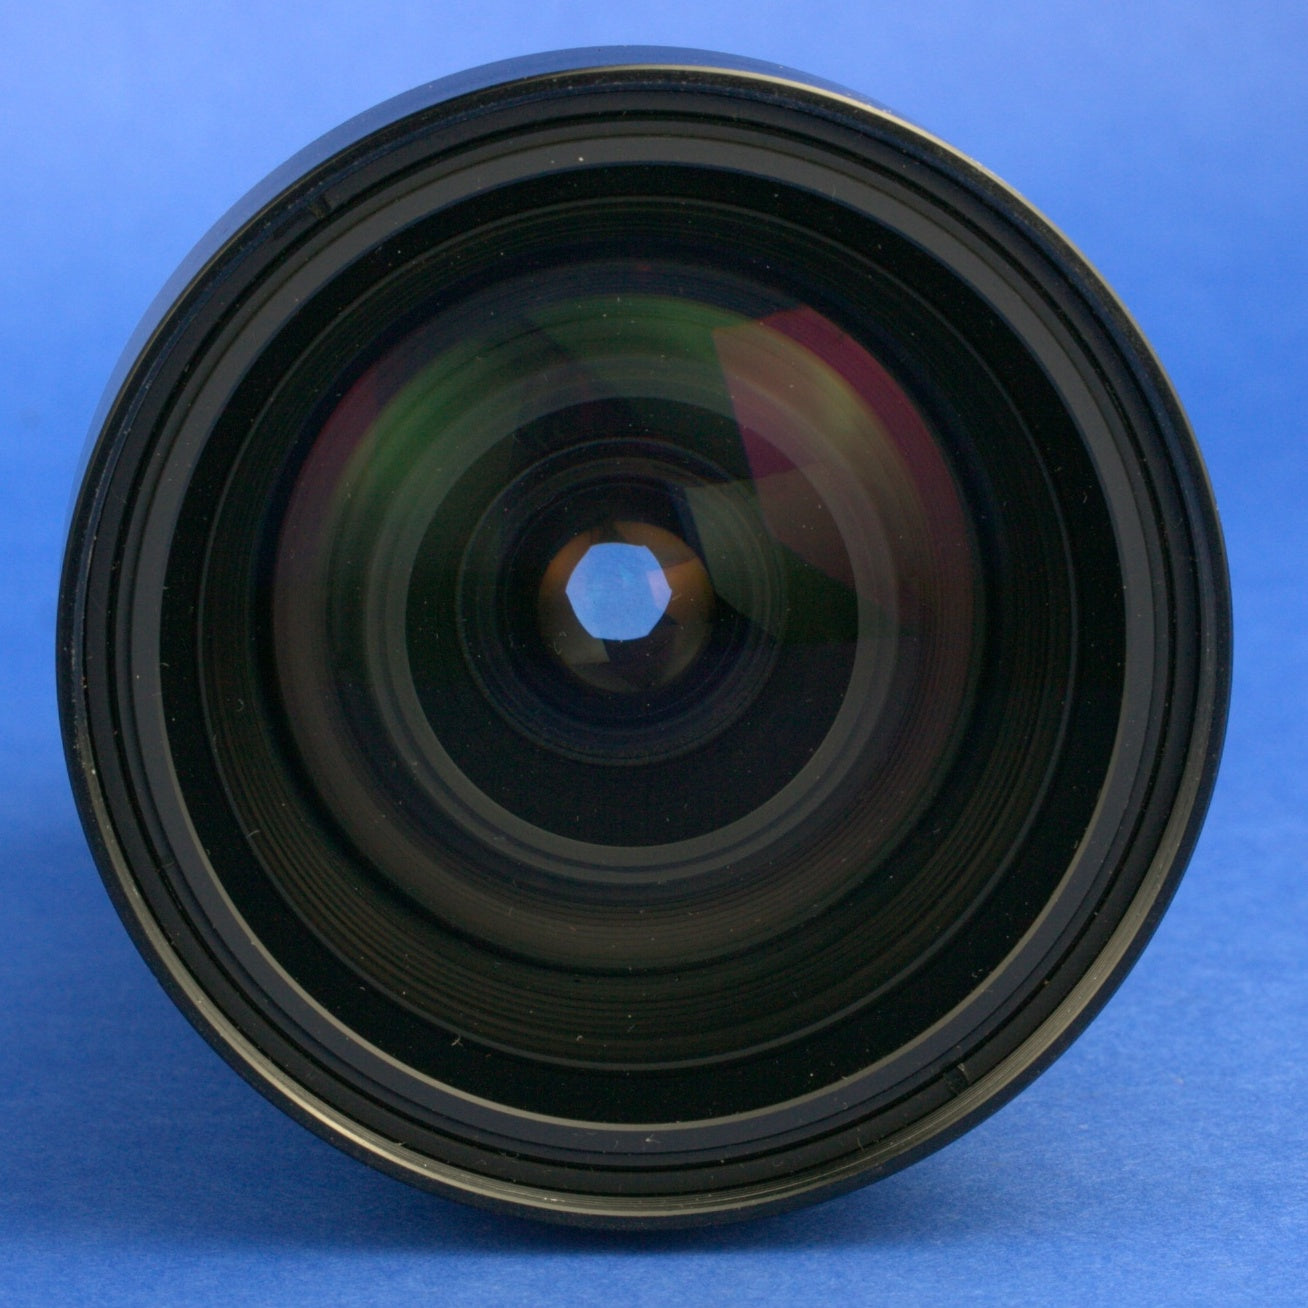 Pentax-A 28-135mm F4 SMC Lens